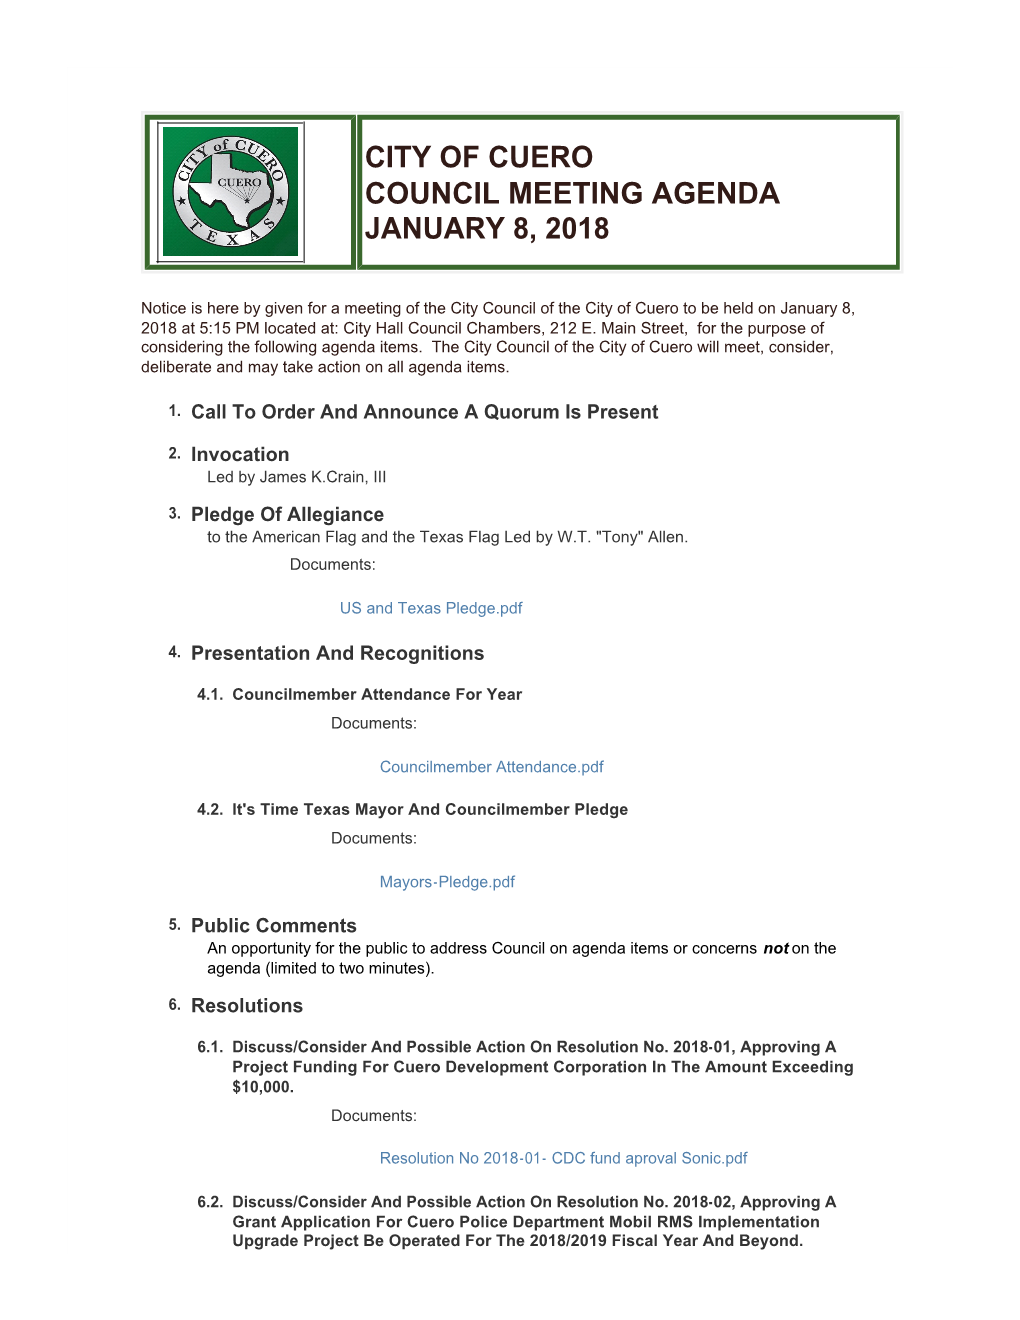 City of Cuero Council Meeting Agenda January 8, 2018